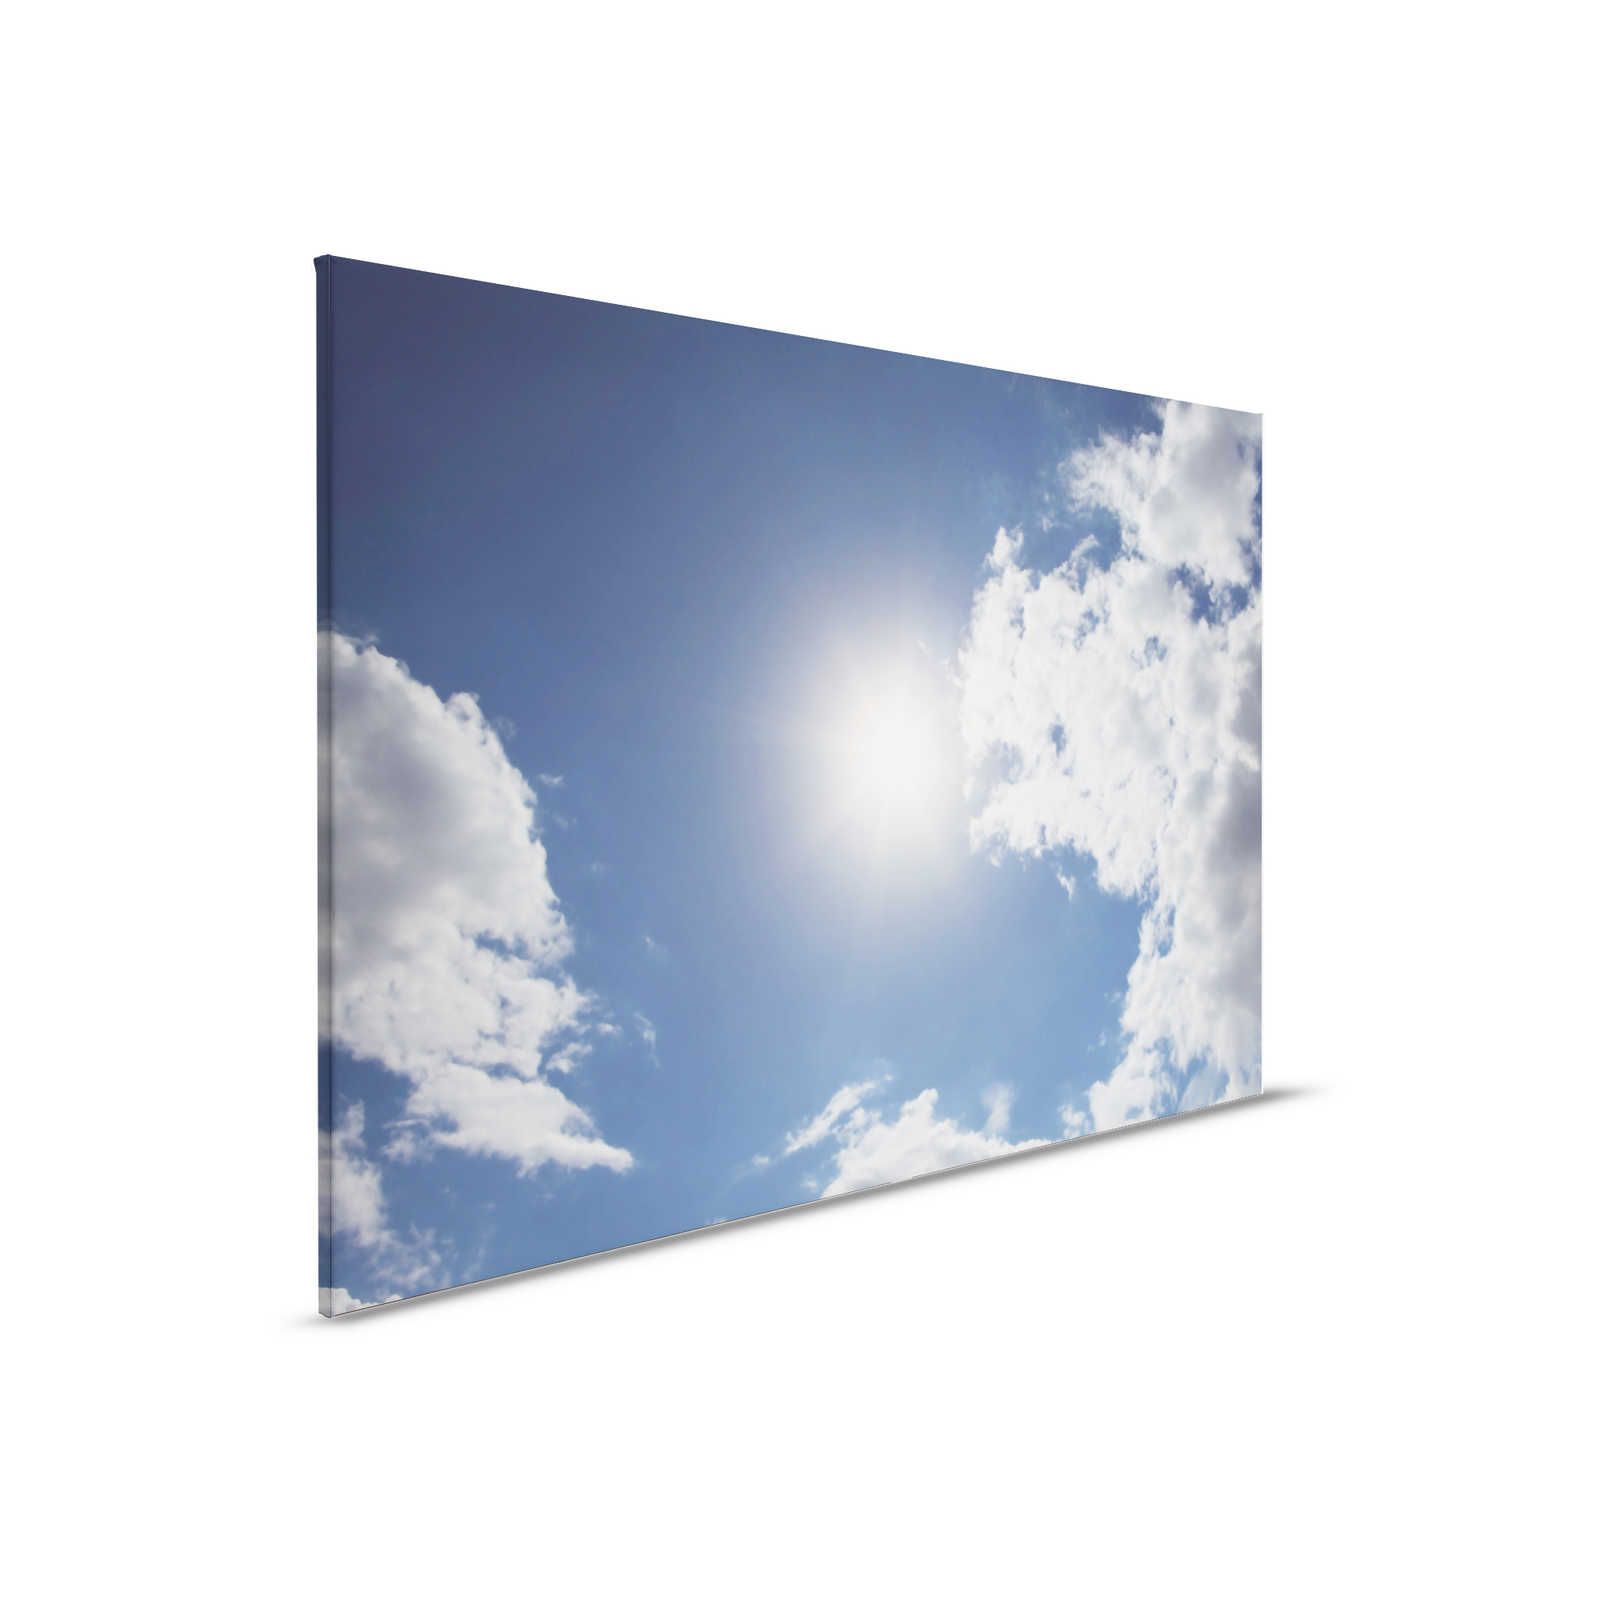         Sky blue - Canvas painting Sunshine & blue cloudy sky - 0,90 m x 0,60 m
    